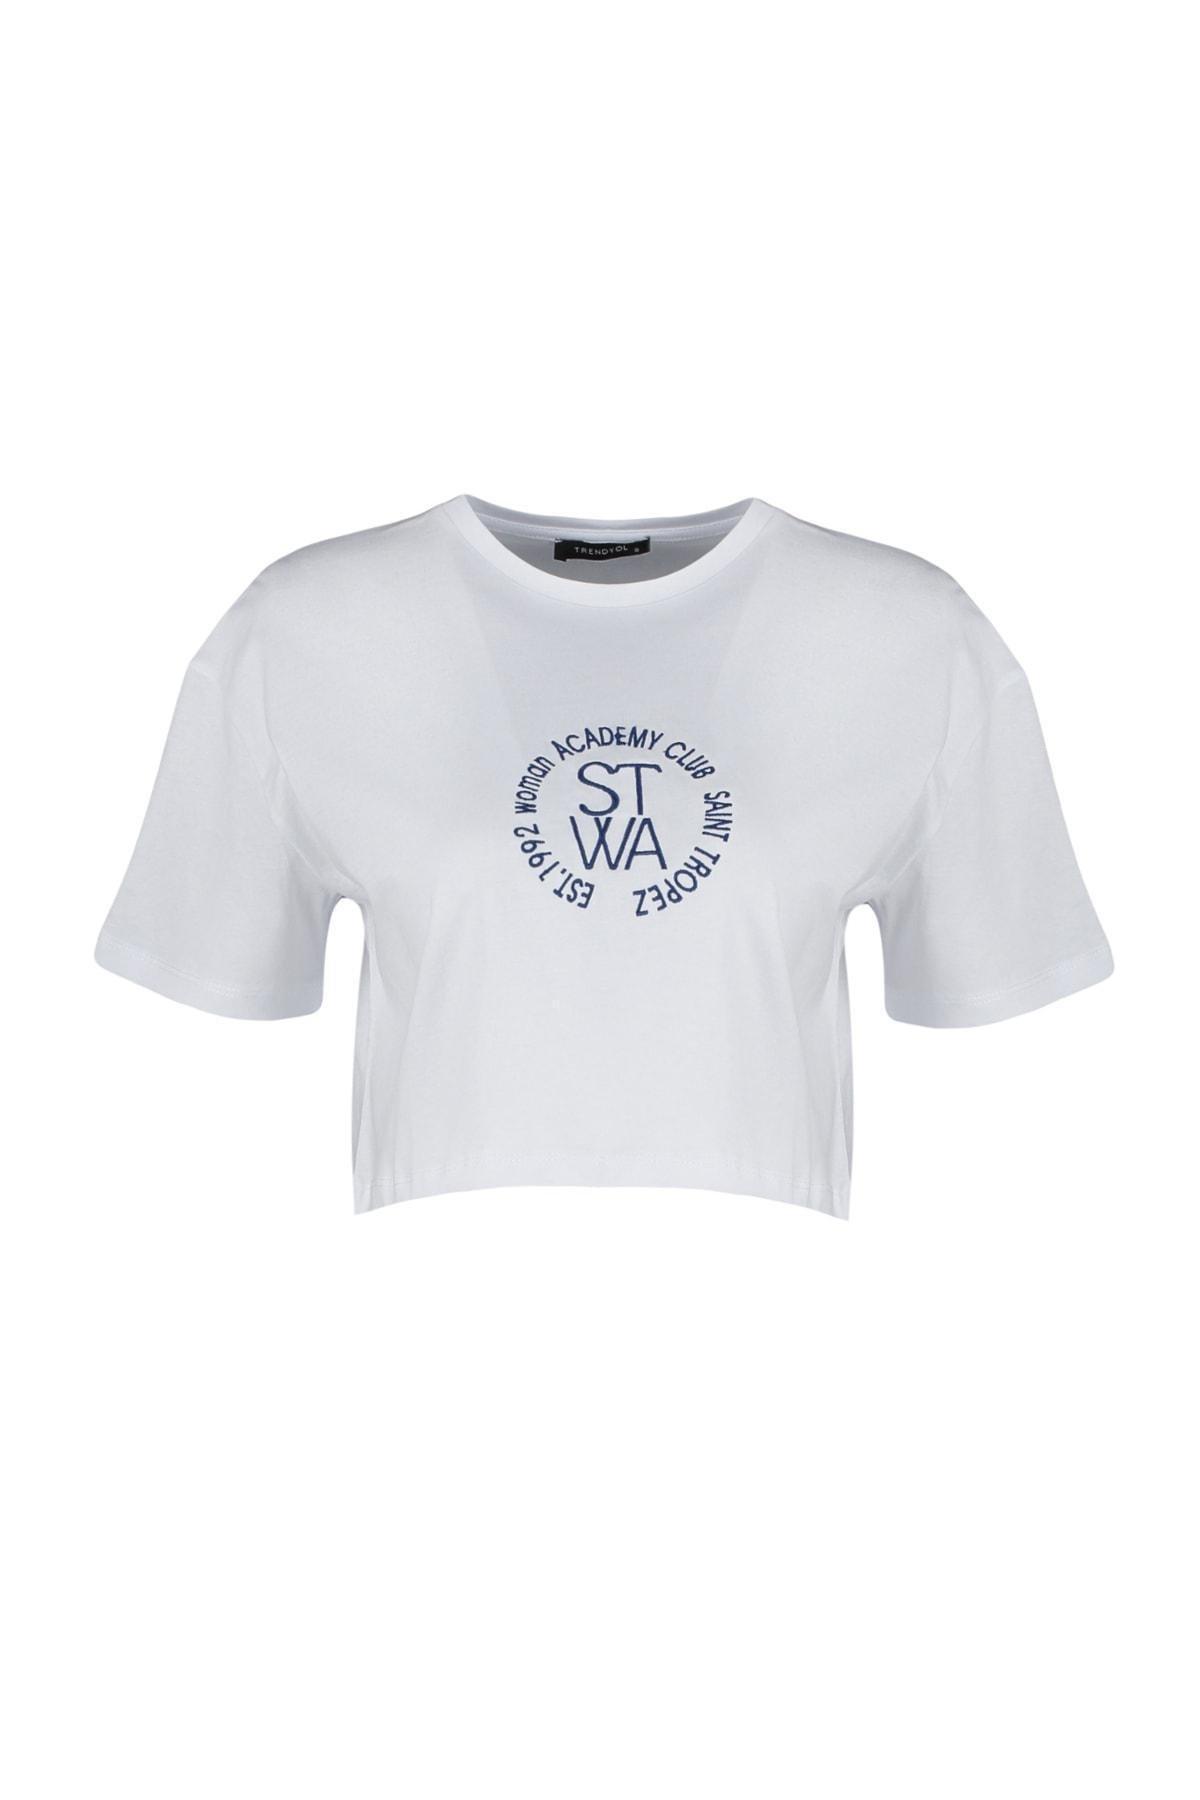 Trendyol - White Printed Crew Neck T-Shirt